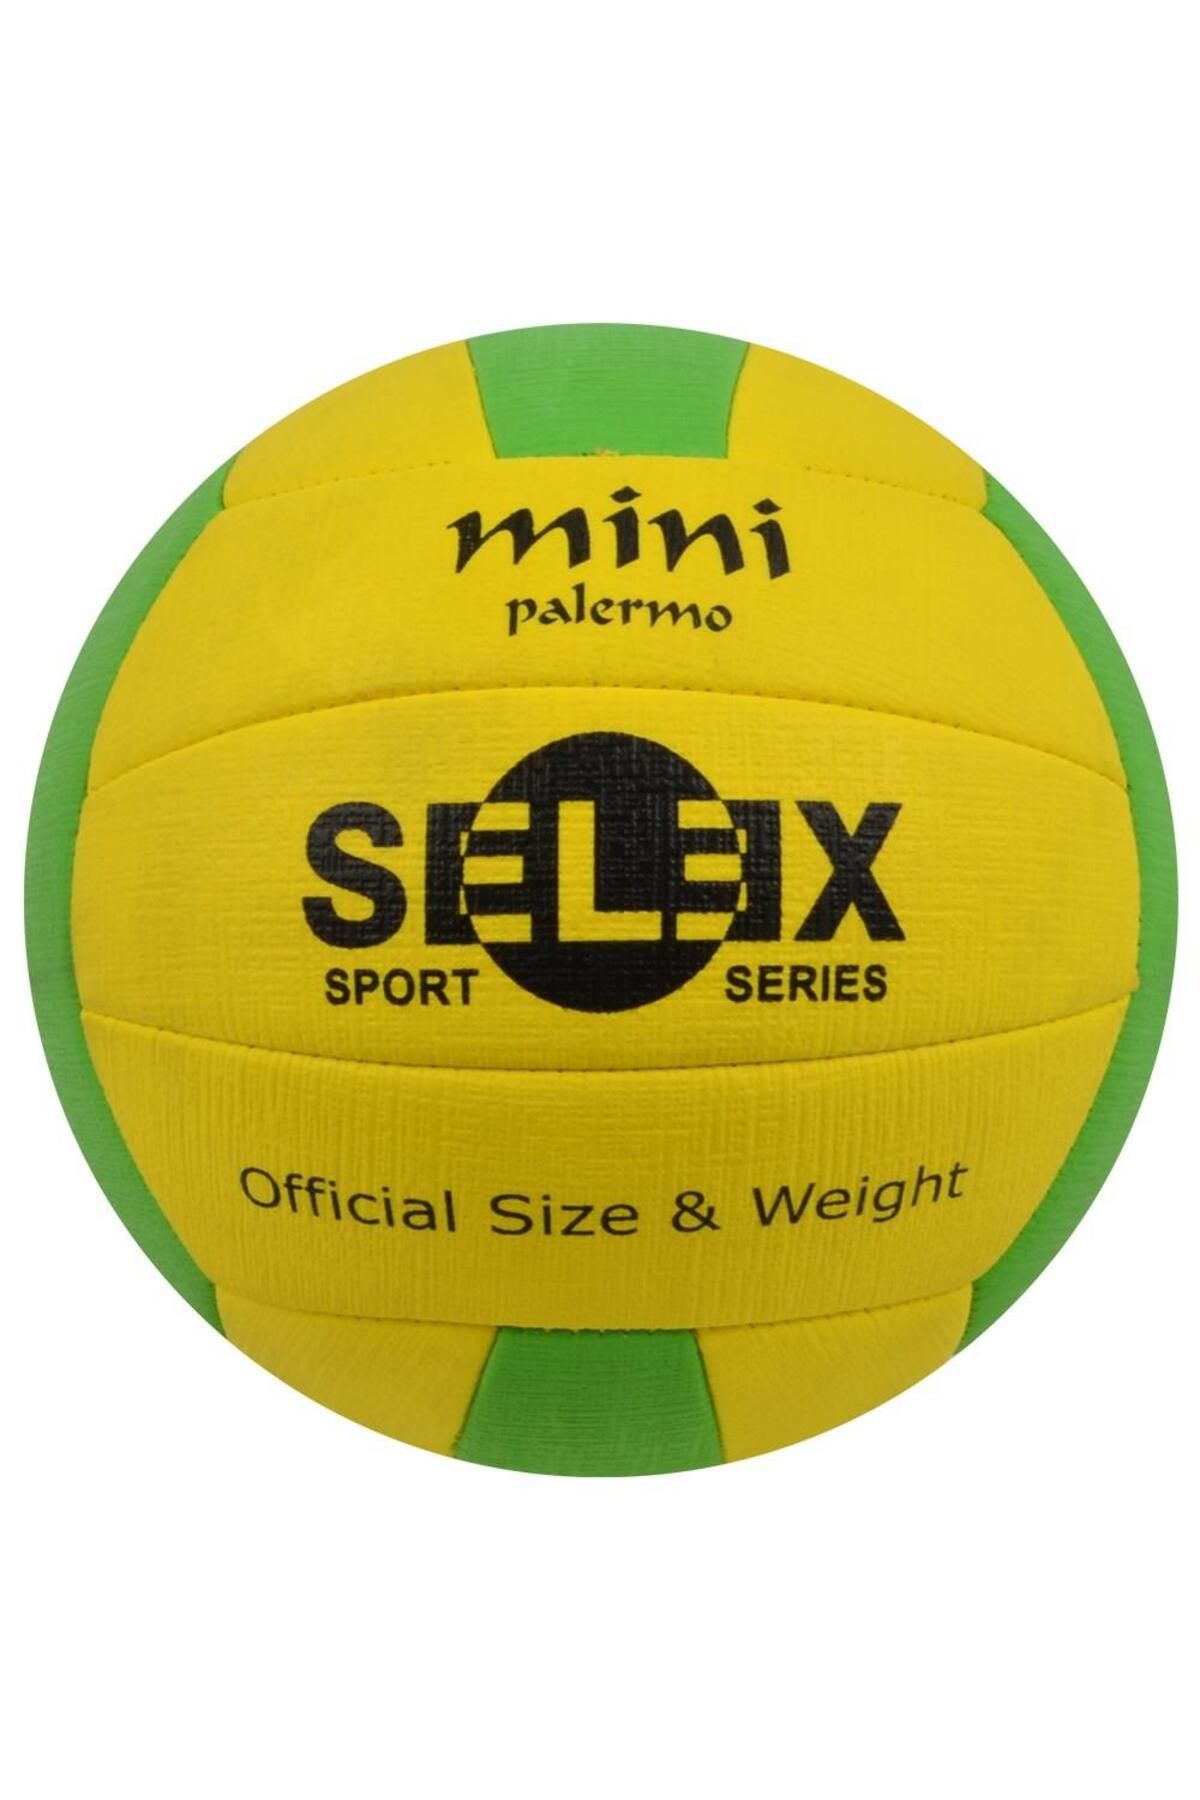 SELEX Palermo Mini 4 No Voleybol Topu Yeşil/sarı